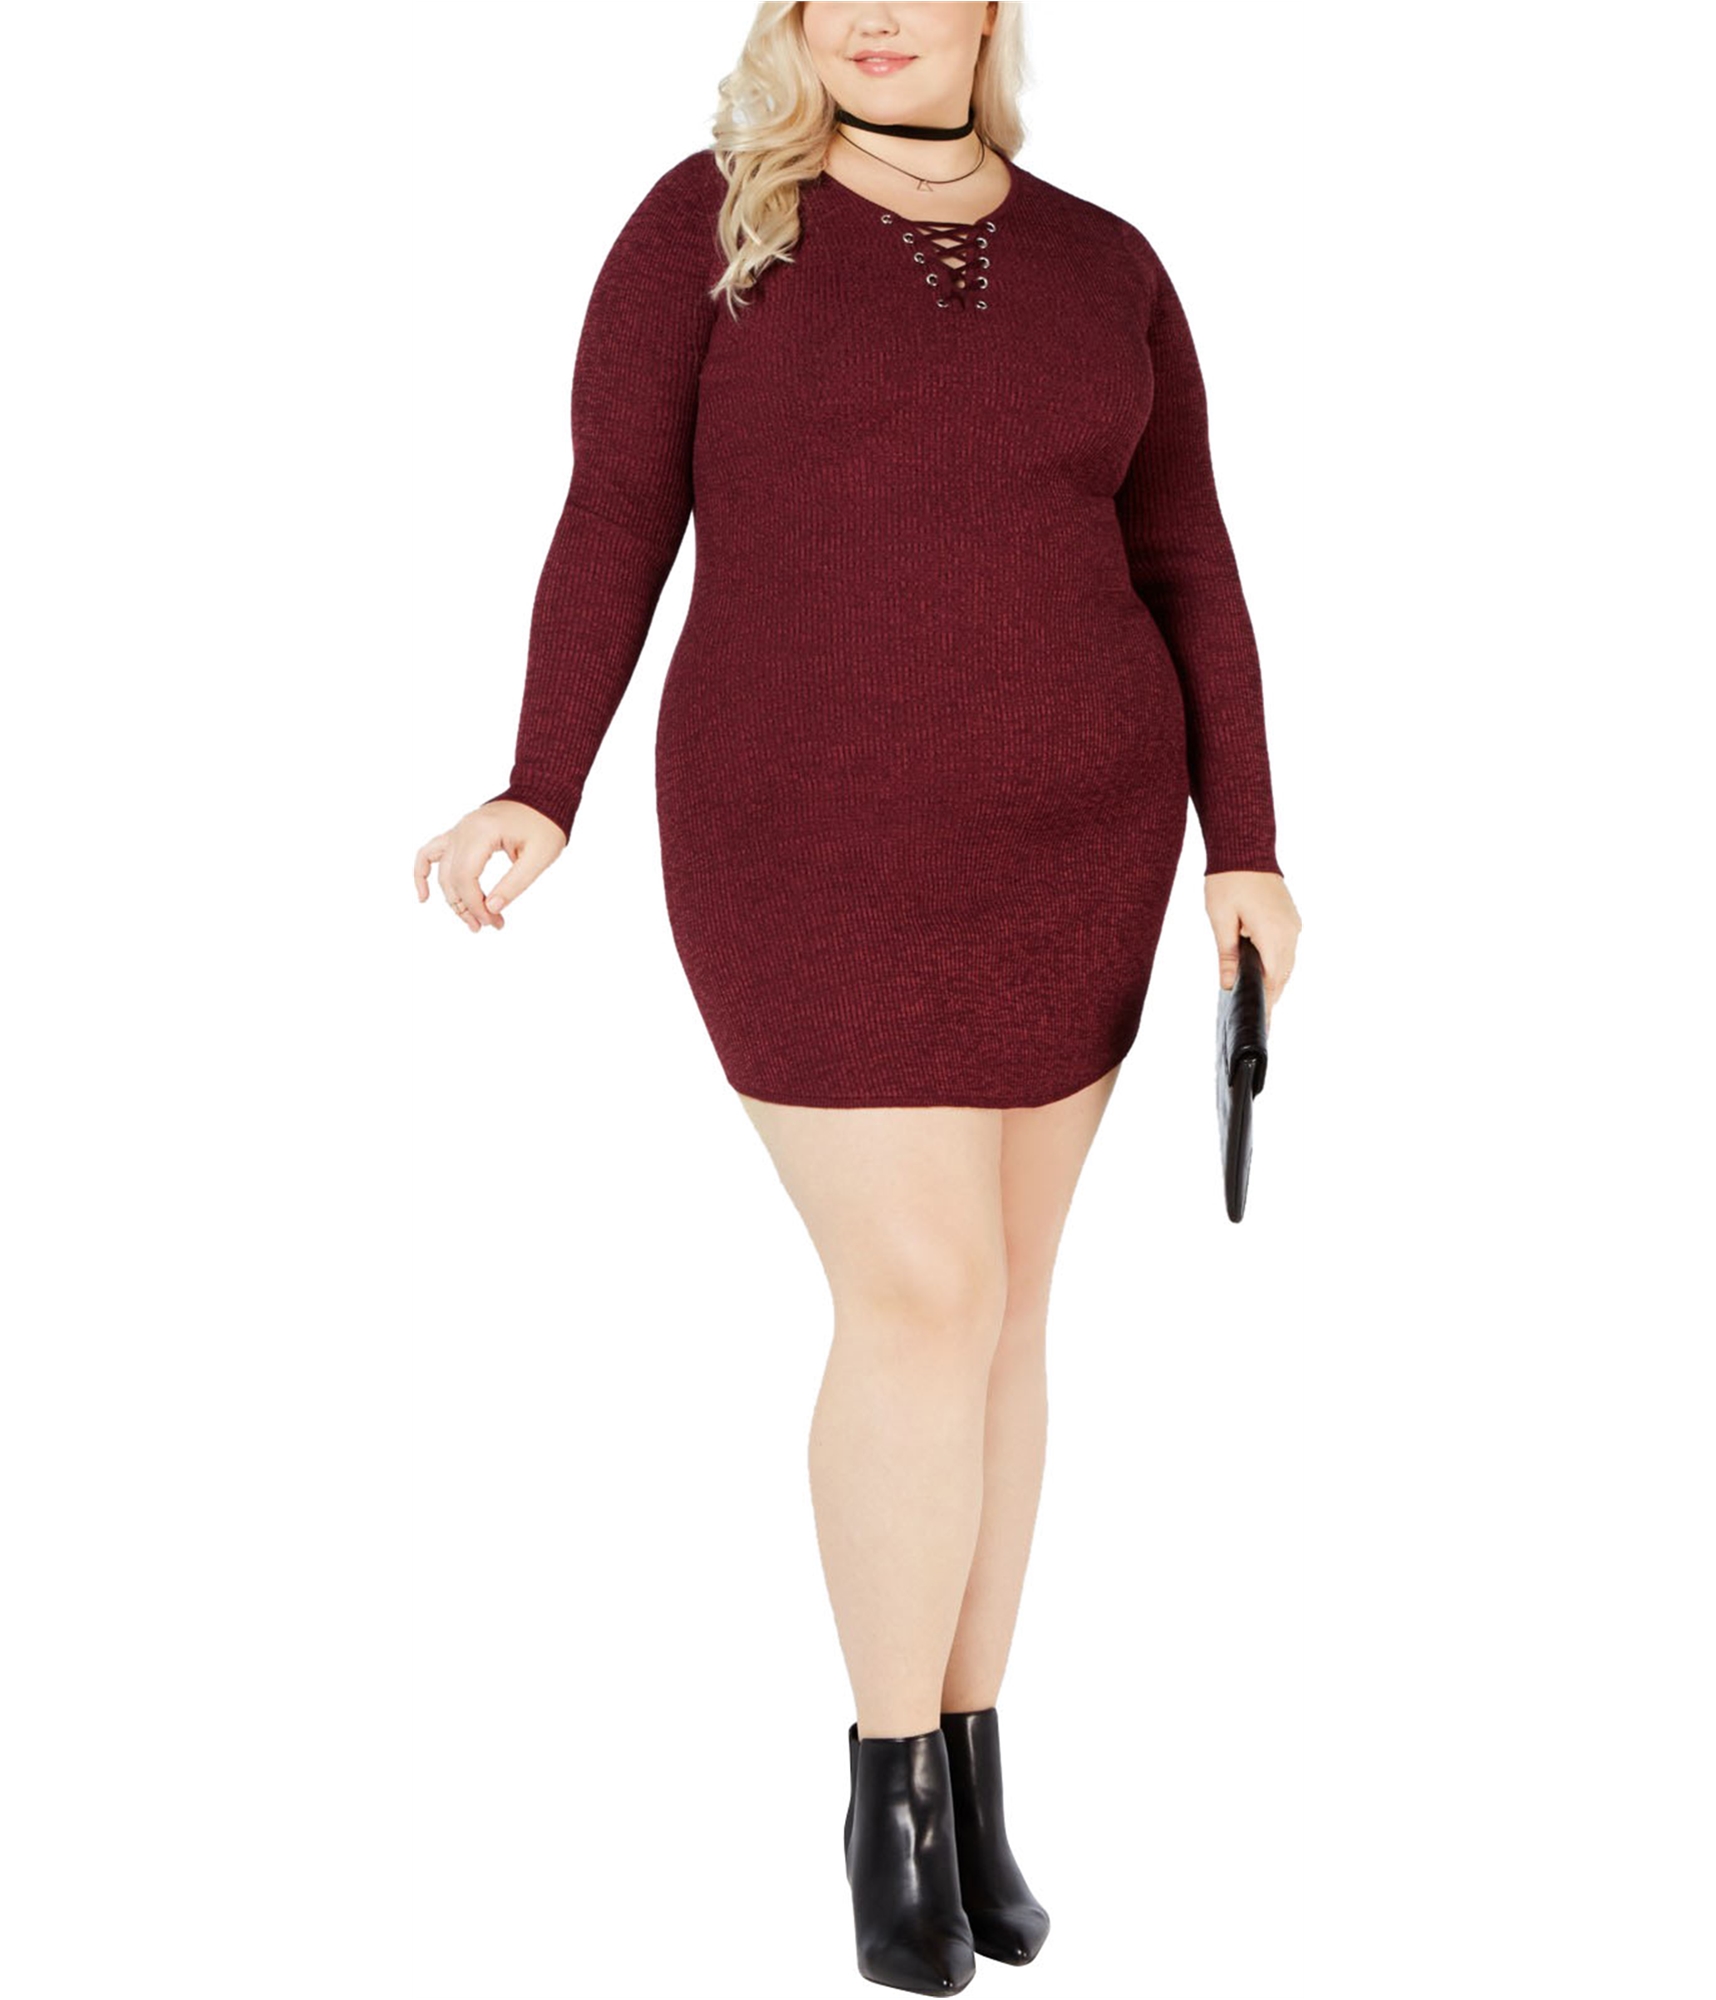 Buy a Derek Heart Womens Lace-Up Sweater Dress